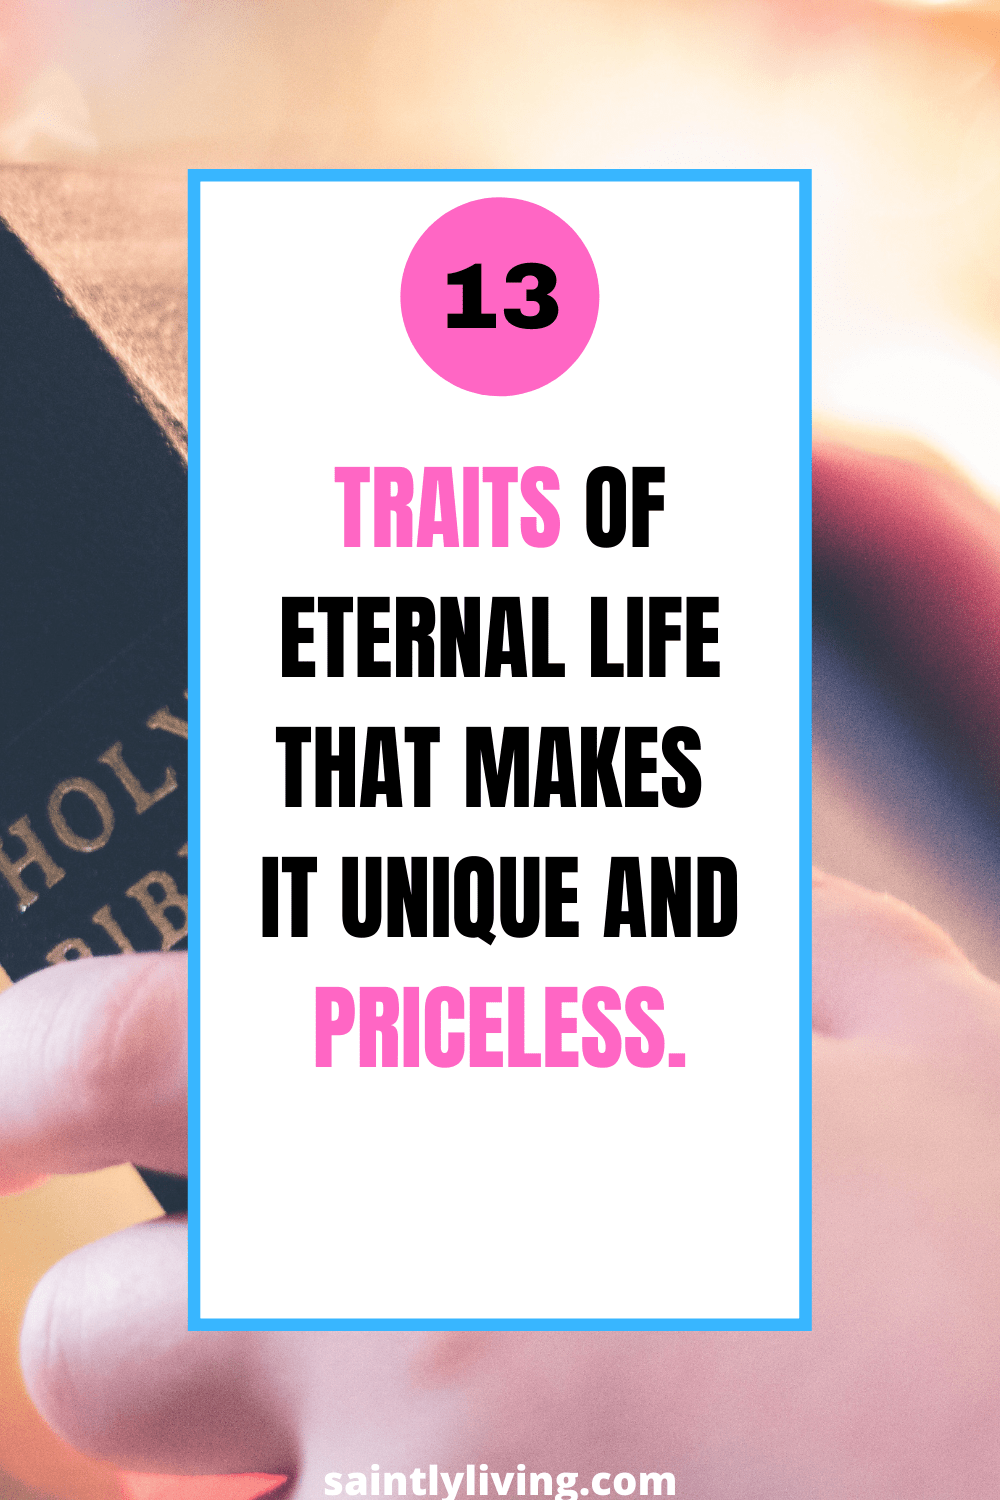  traits of eternal life.